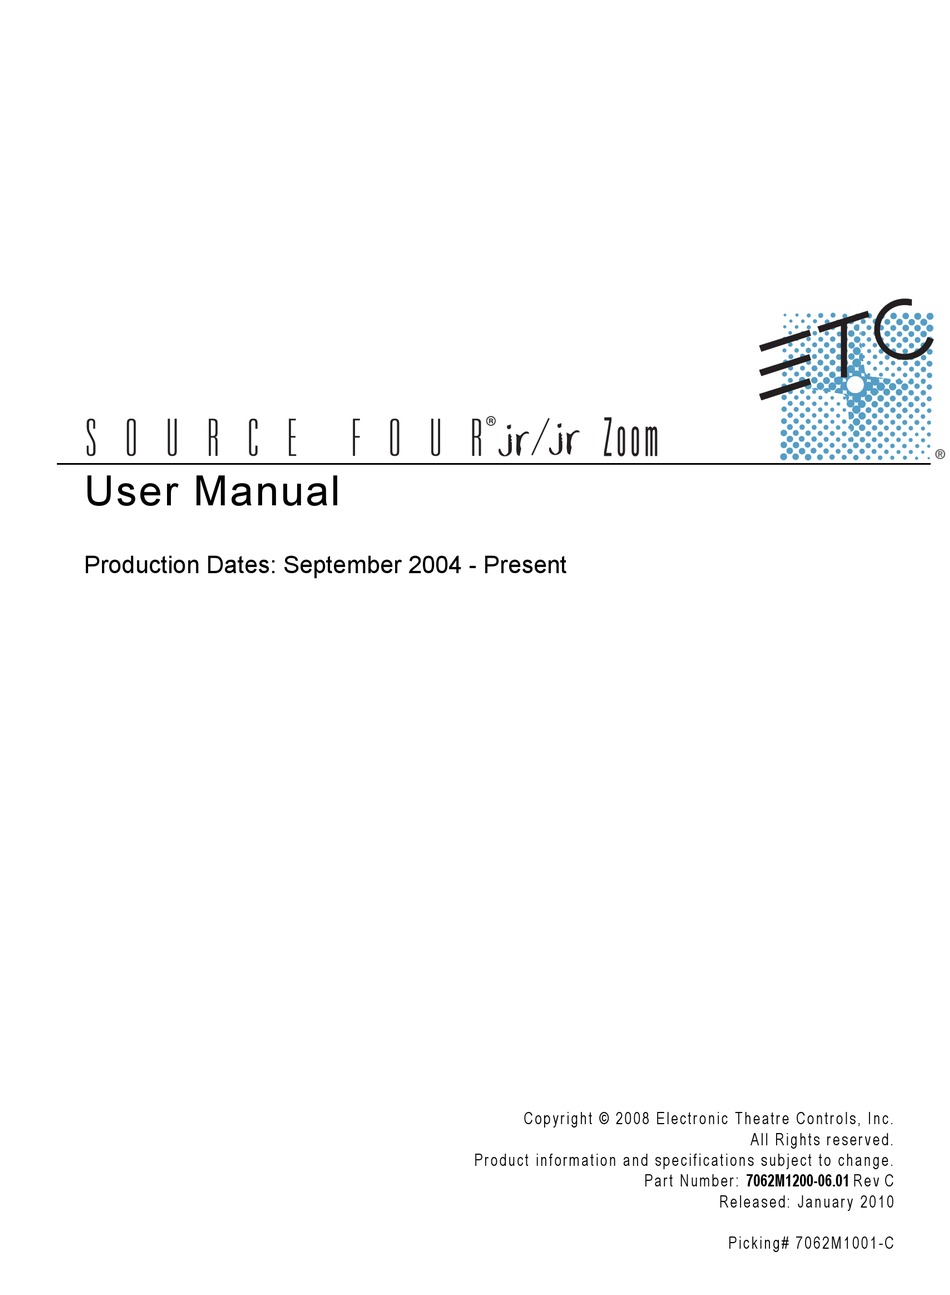 ETC SOURCE FOUR JR USER MANUAL Pdf Download | ManualsLib